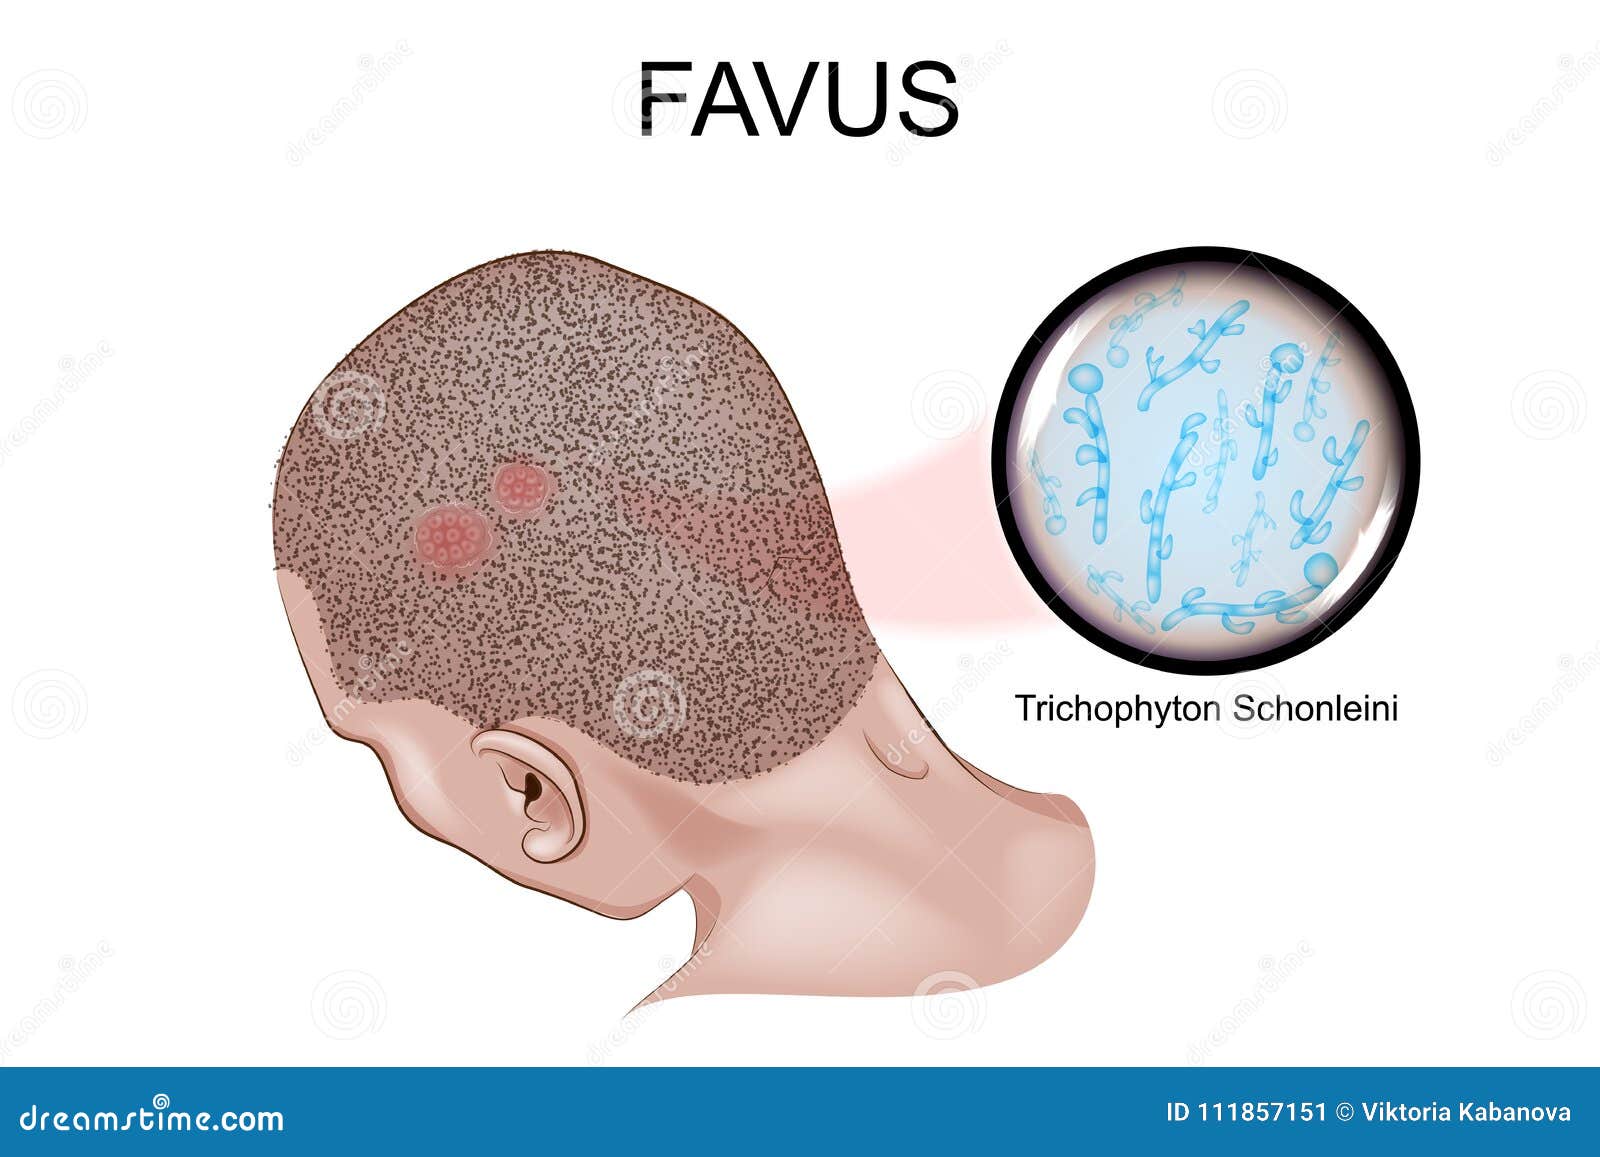 favus. the causative agent of favus